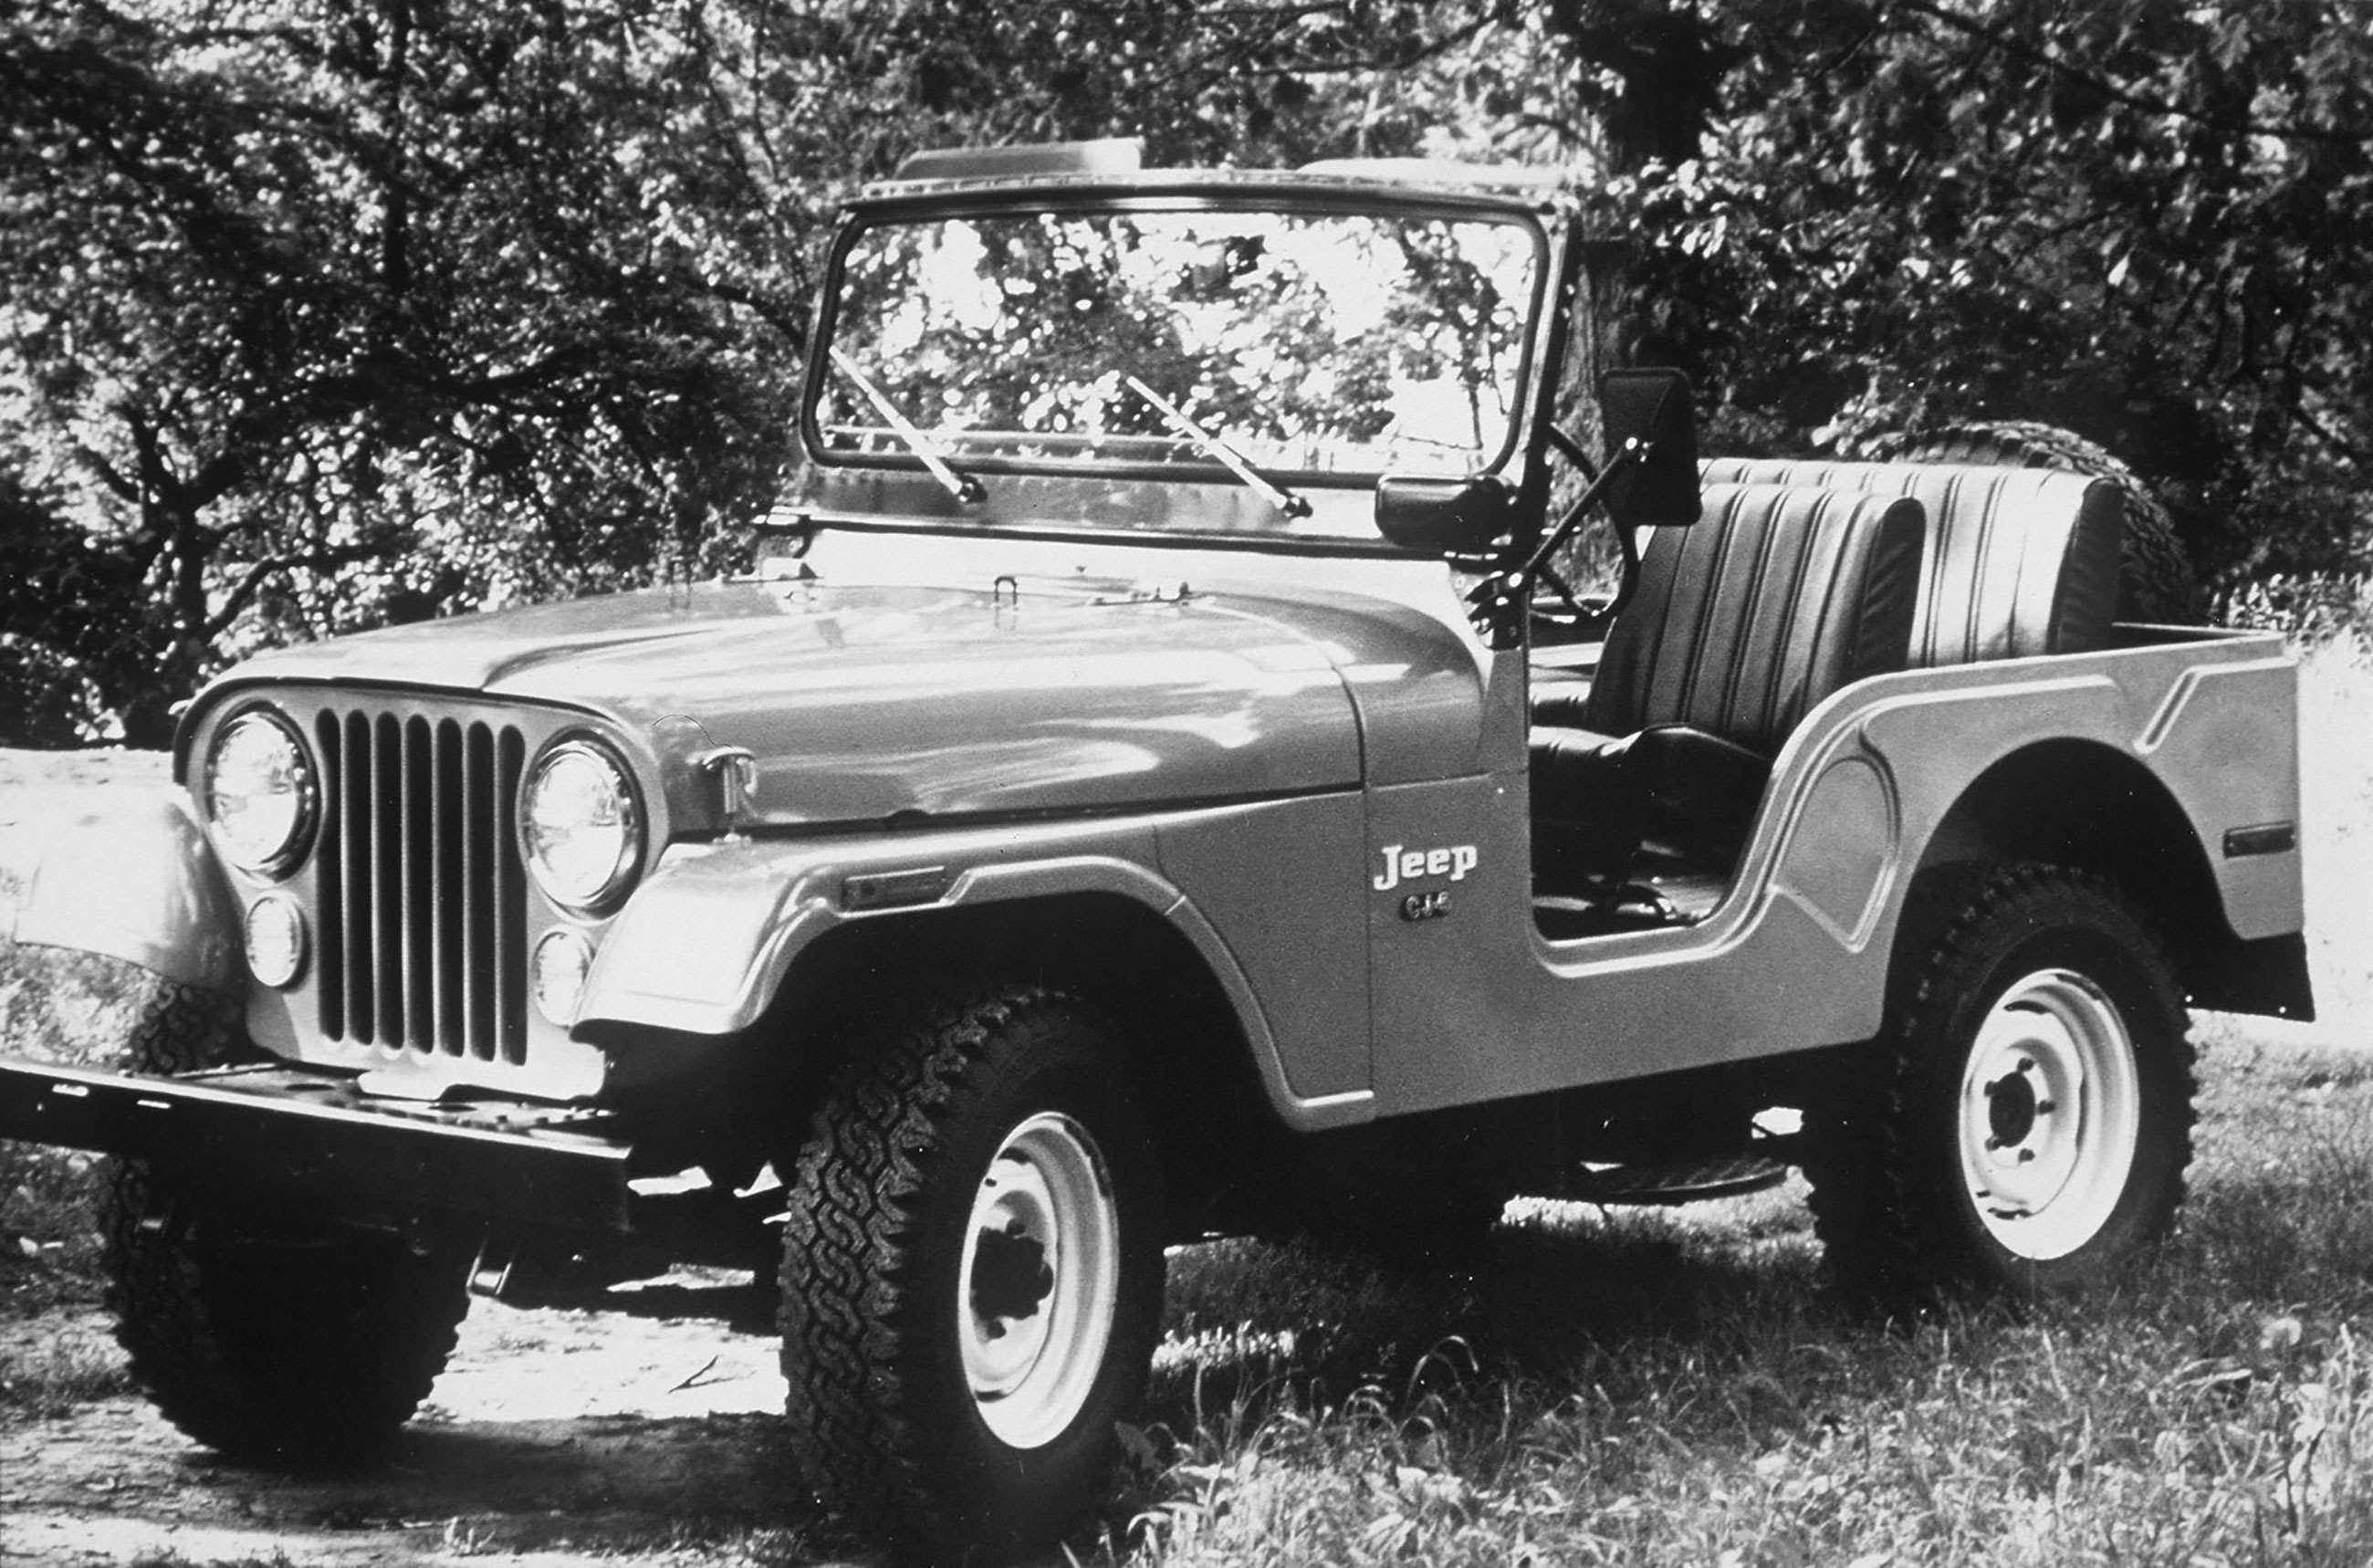 jeep-willys-1955-cj-goodwood-05052020.jpg